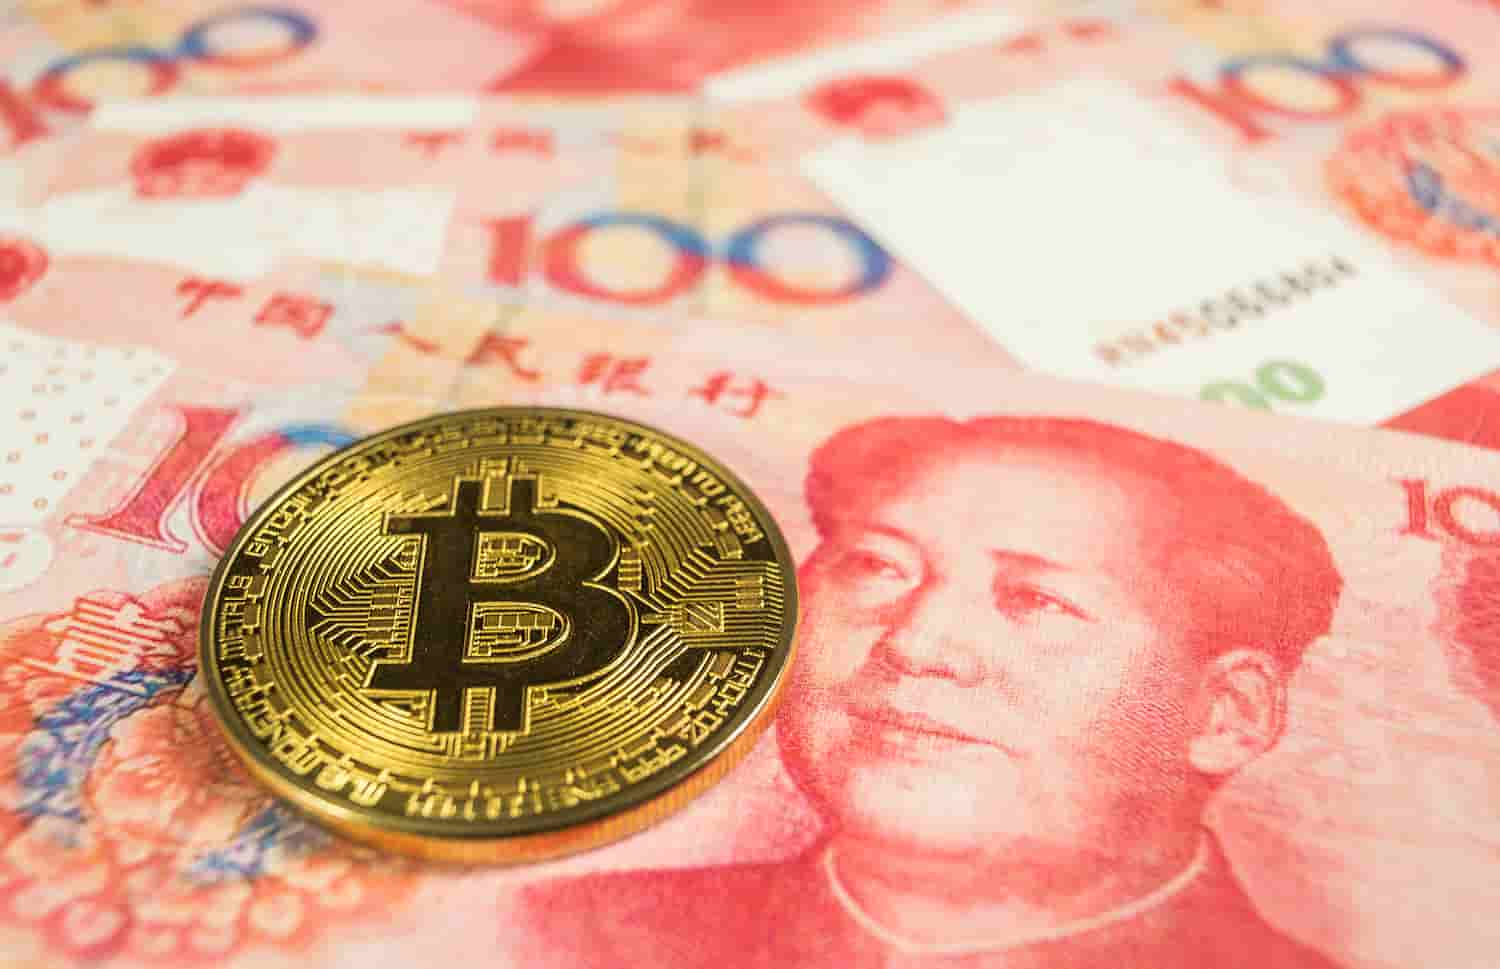 nota da moeda chinesa e moeda do bitcoin